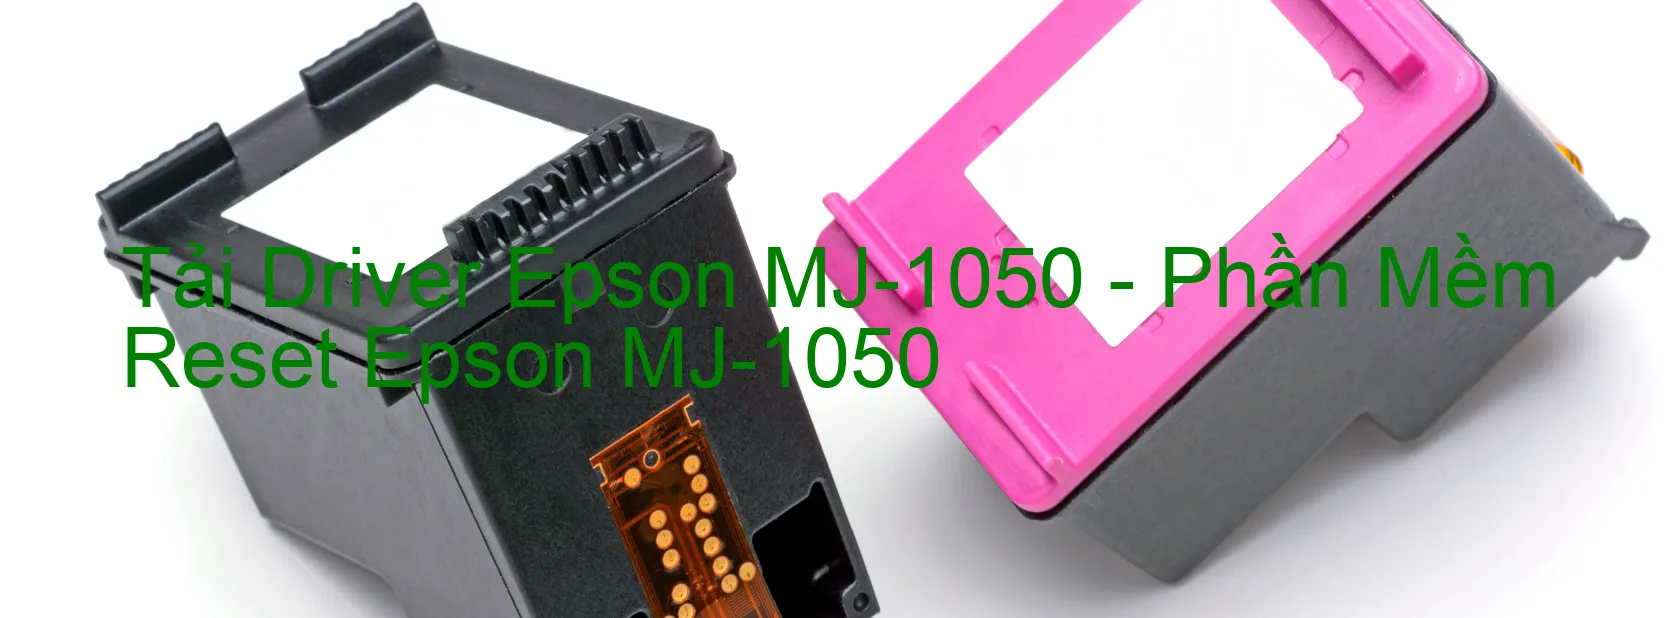 Driver Epson MJ-1050, Phần Mềm Reset Epson MJ-1050